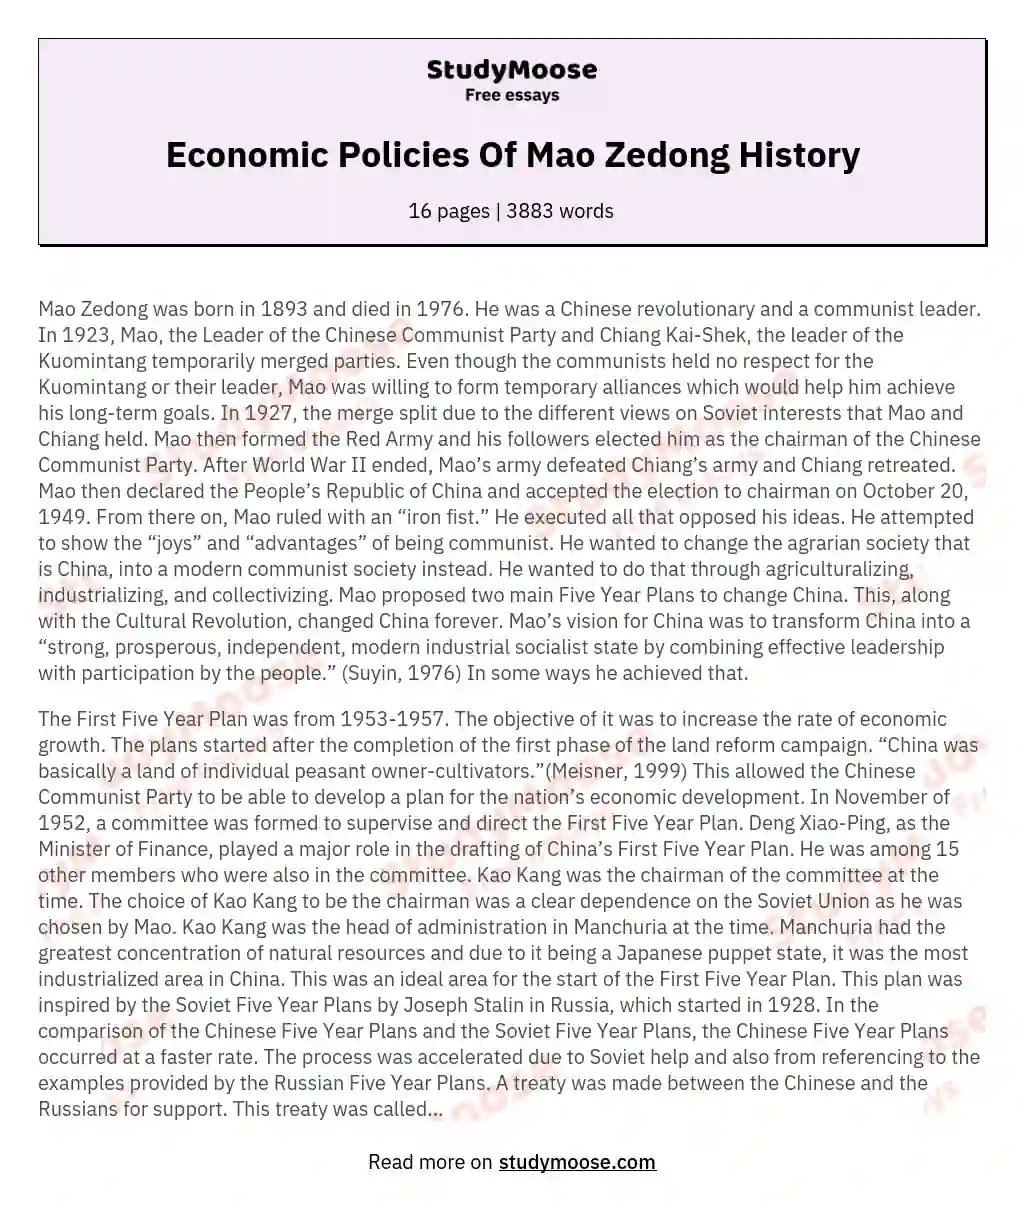 Economic Policies Of Mao Zedong History